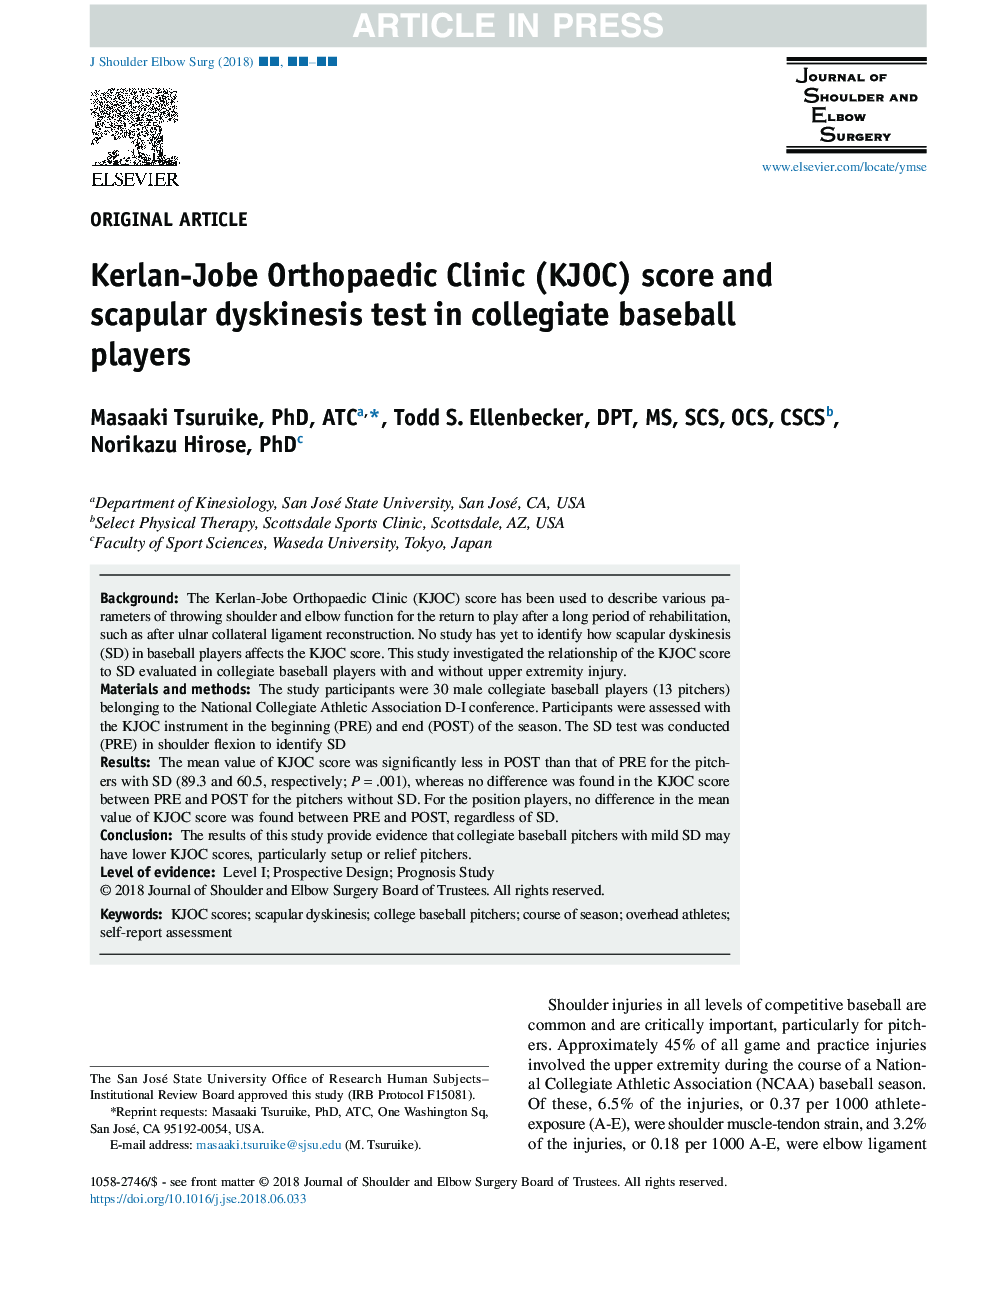 Kerlan-Jobe Orthopaedic Clinic (KJOC) score and scapular dyskinesis test in collegiate baseball players